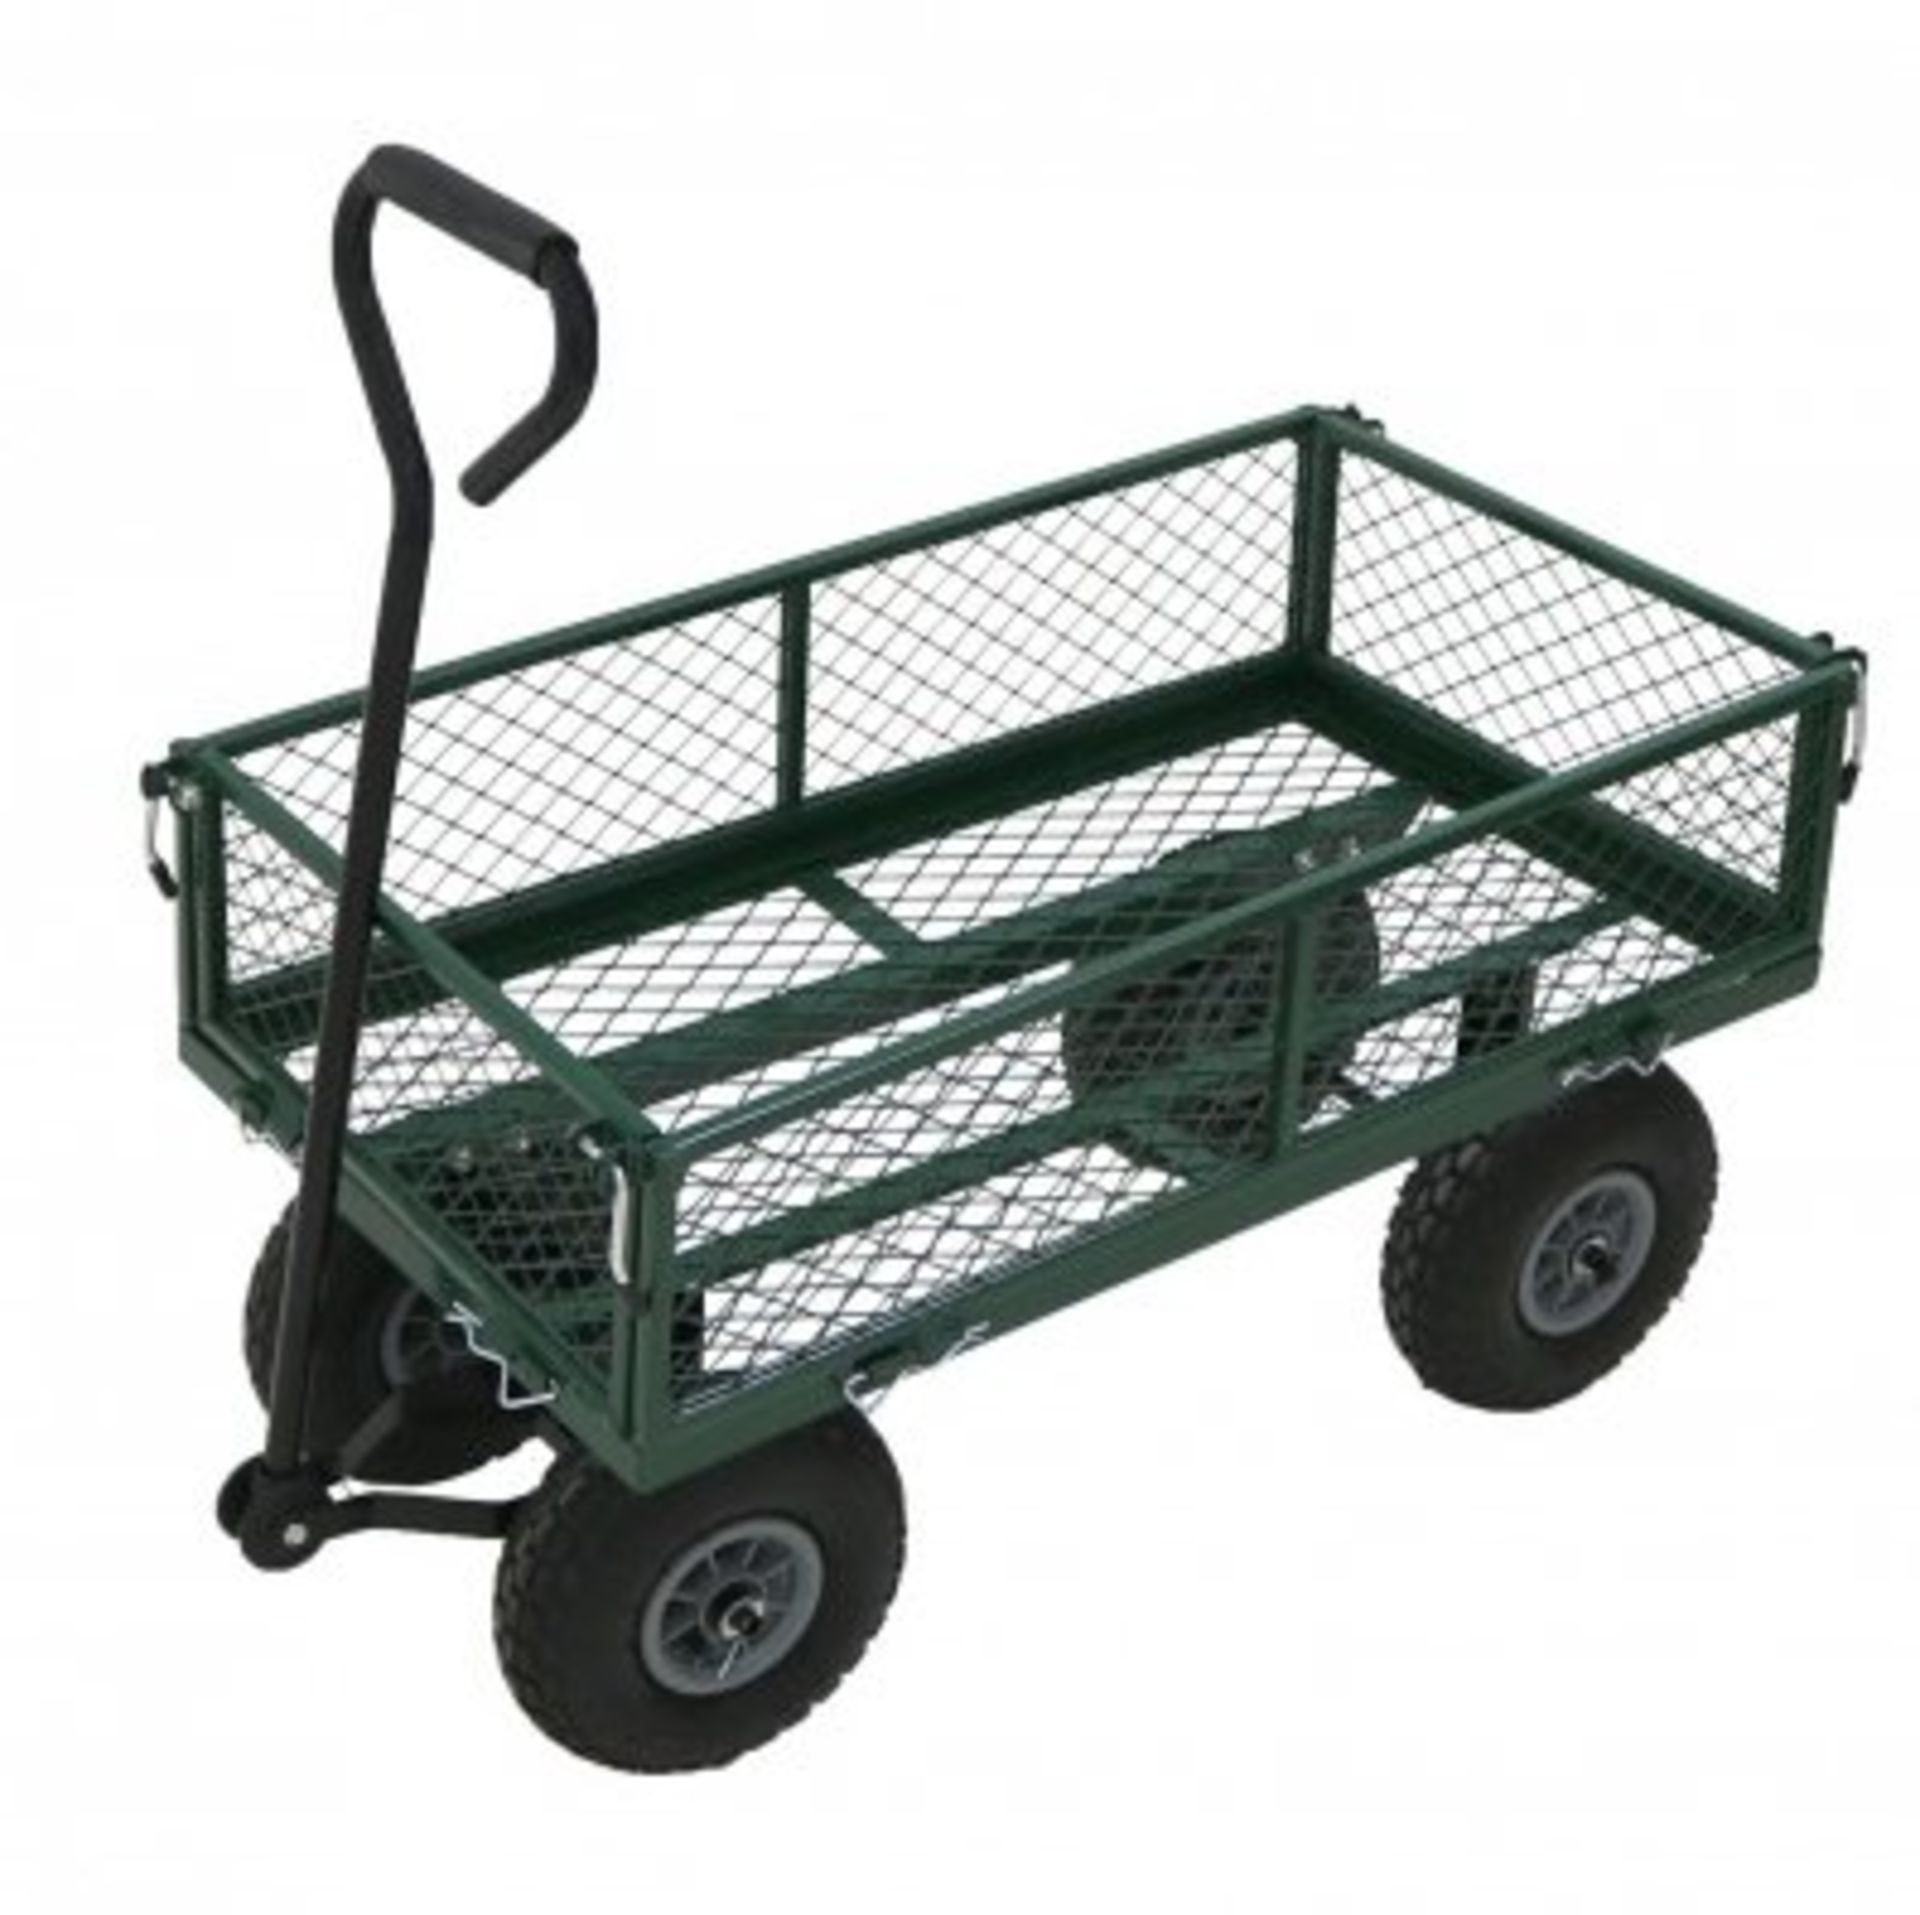 (LF75) Heavy Duty Metal Gardening Trolley - Green Trailer Cart Our latest arrival is the gar...